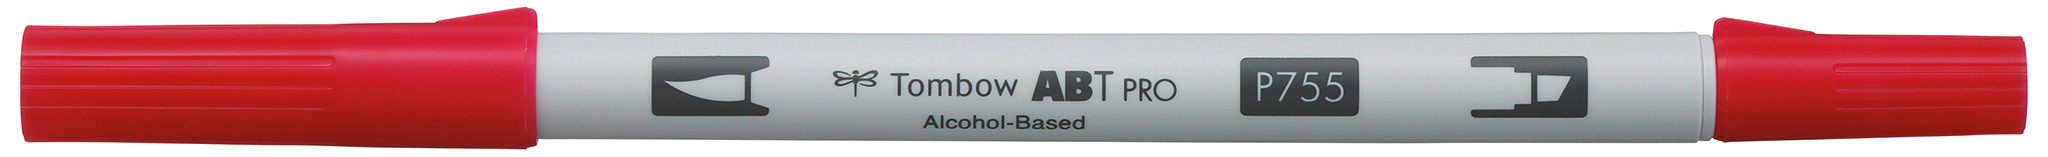 TOMBOW Dual Brush Pen ABT PRO ABTP-755 rubine red rubine red